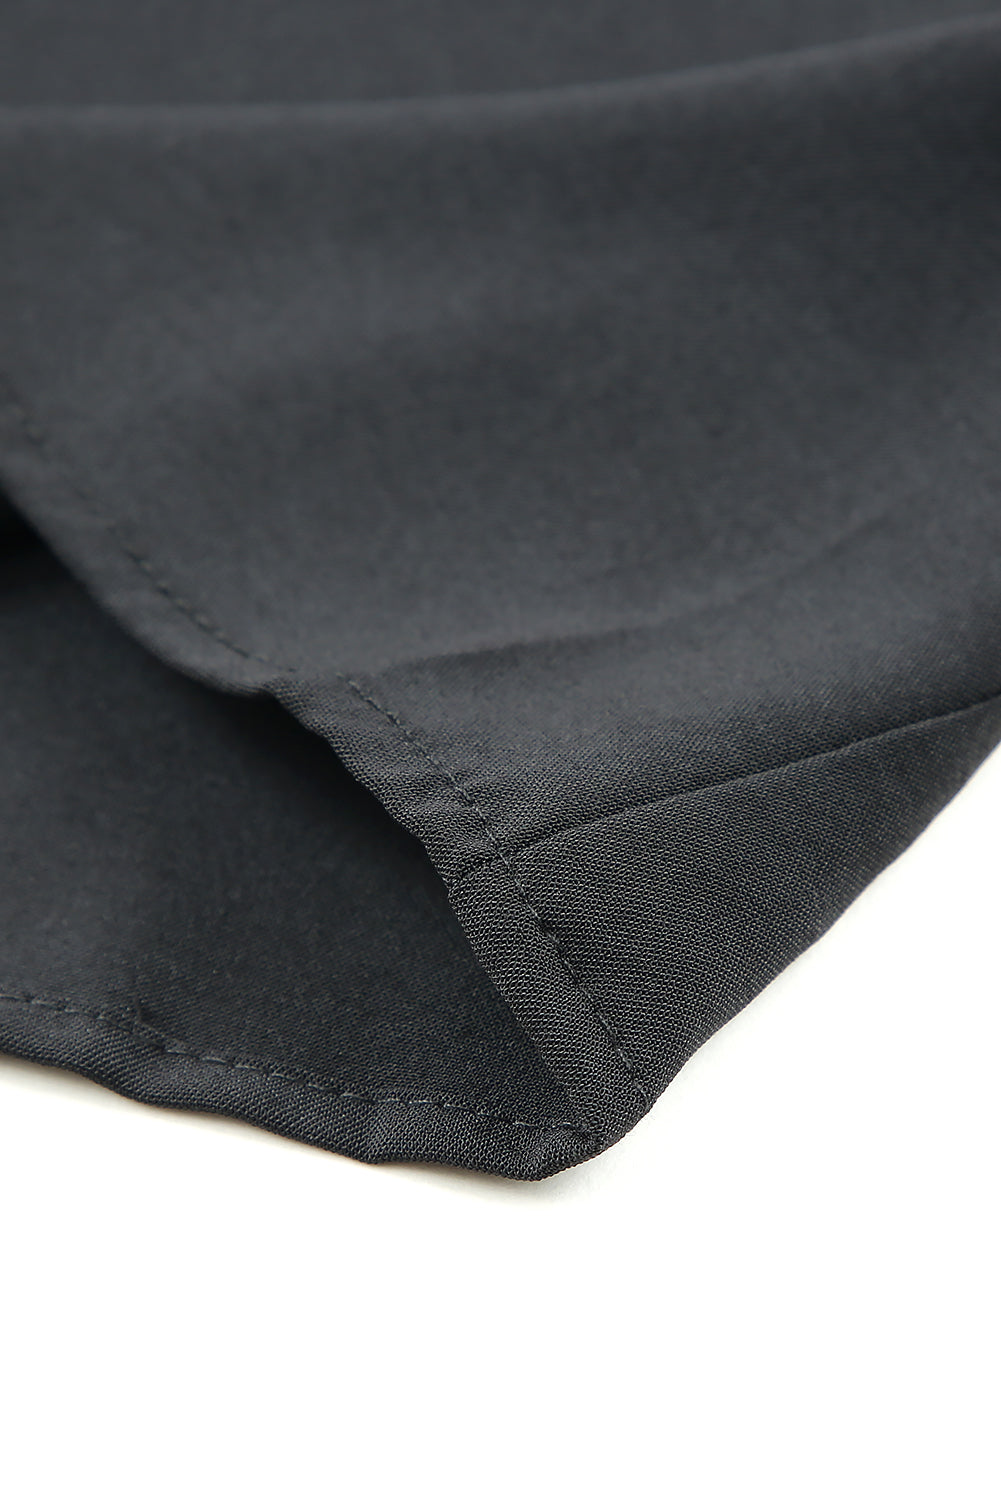 Black Split V Neck Short Sleeve Casual Tunic Dress